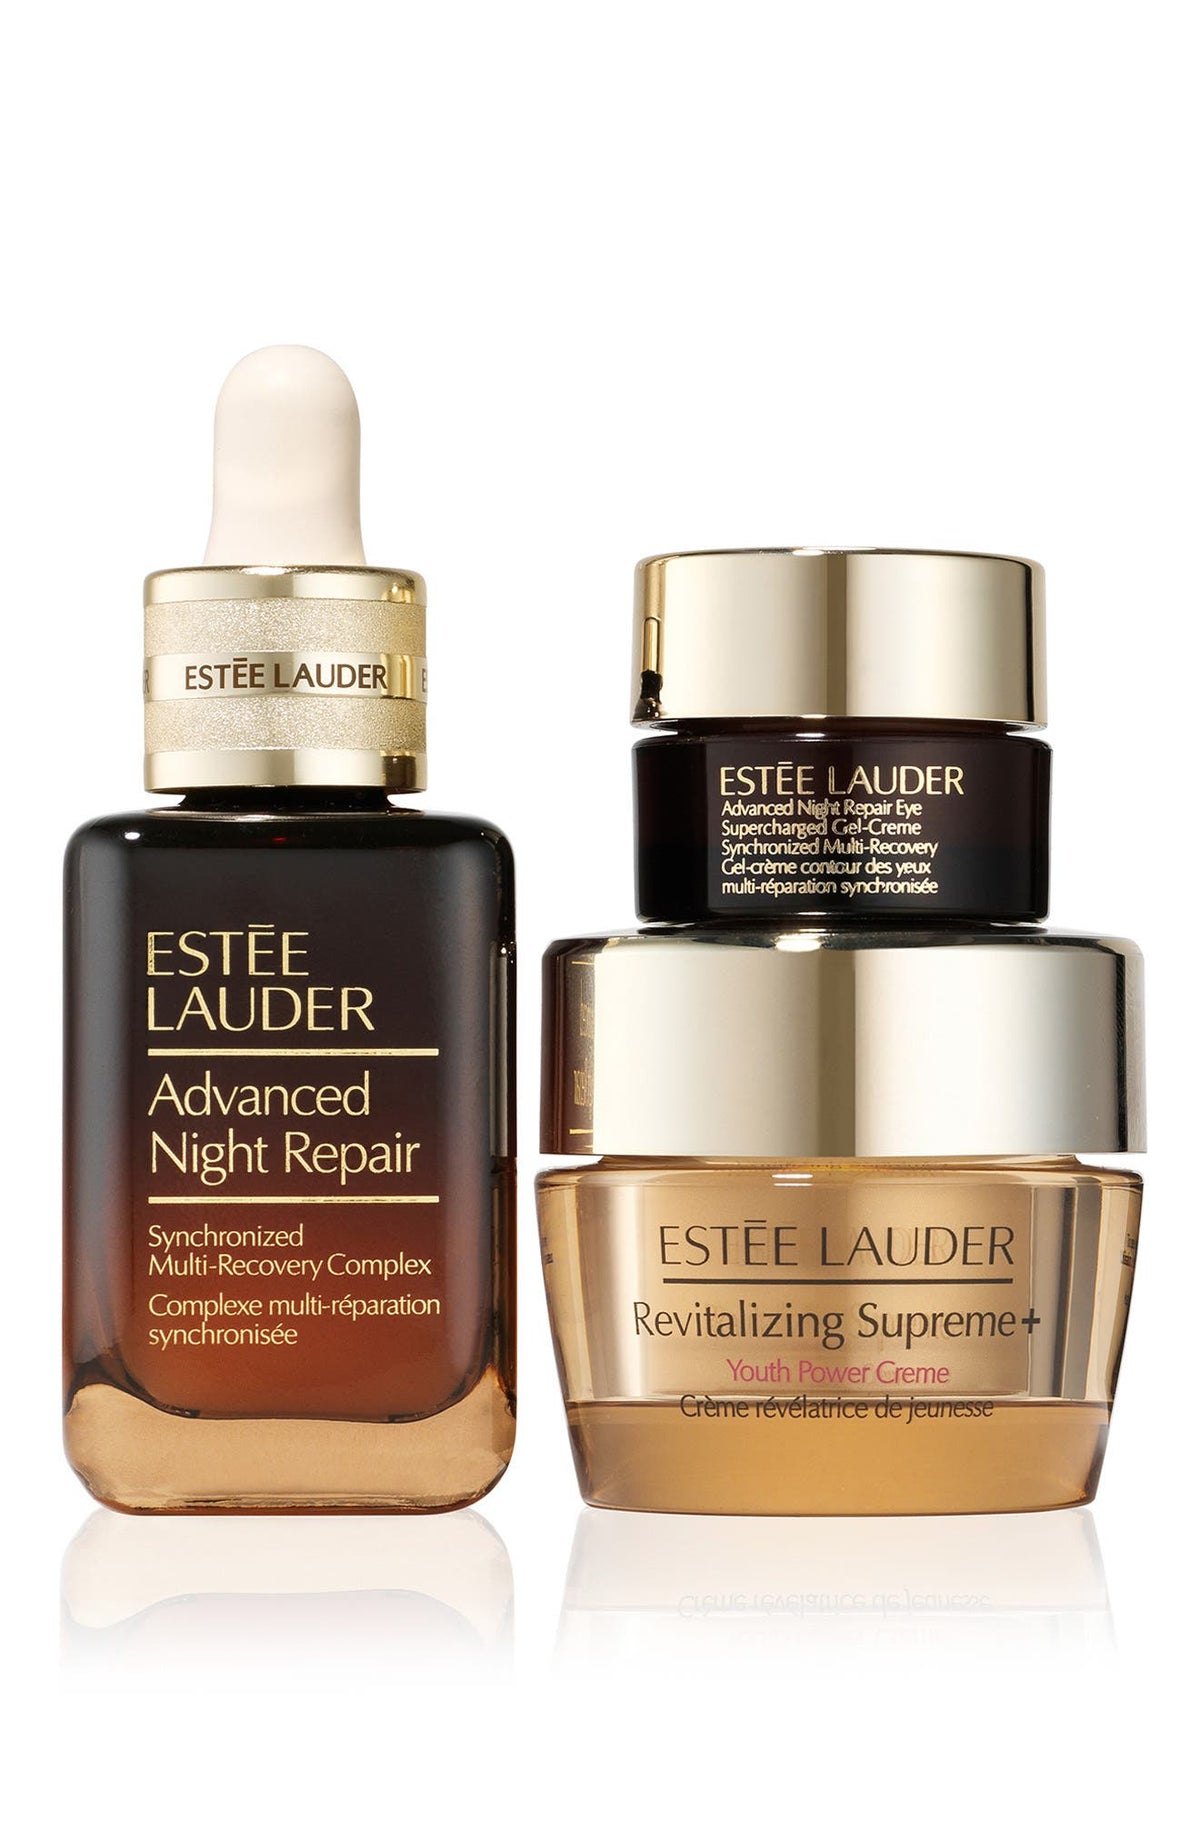 Estee Lauder Nighttime Experts Skincare SetRepair + Firm + Hydrate (Value $136.00)